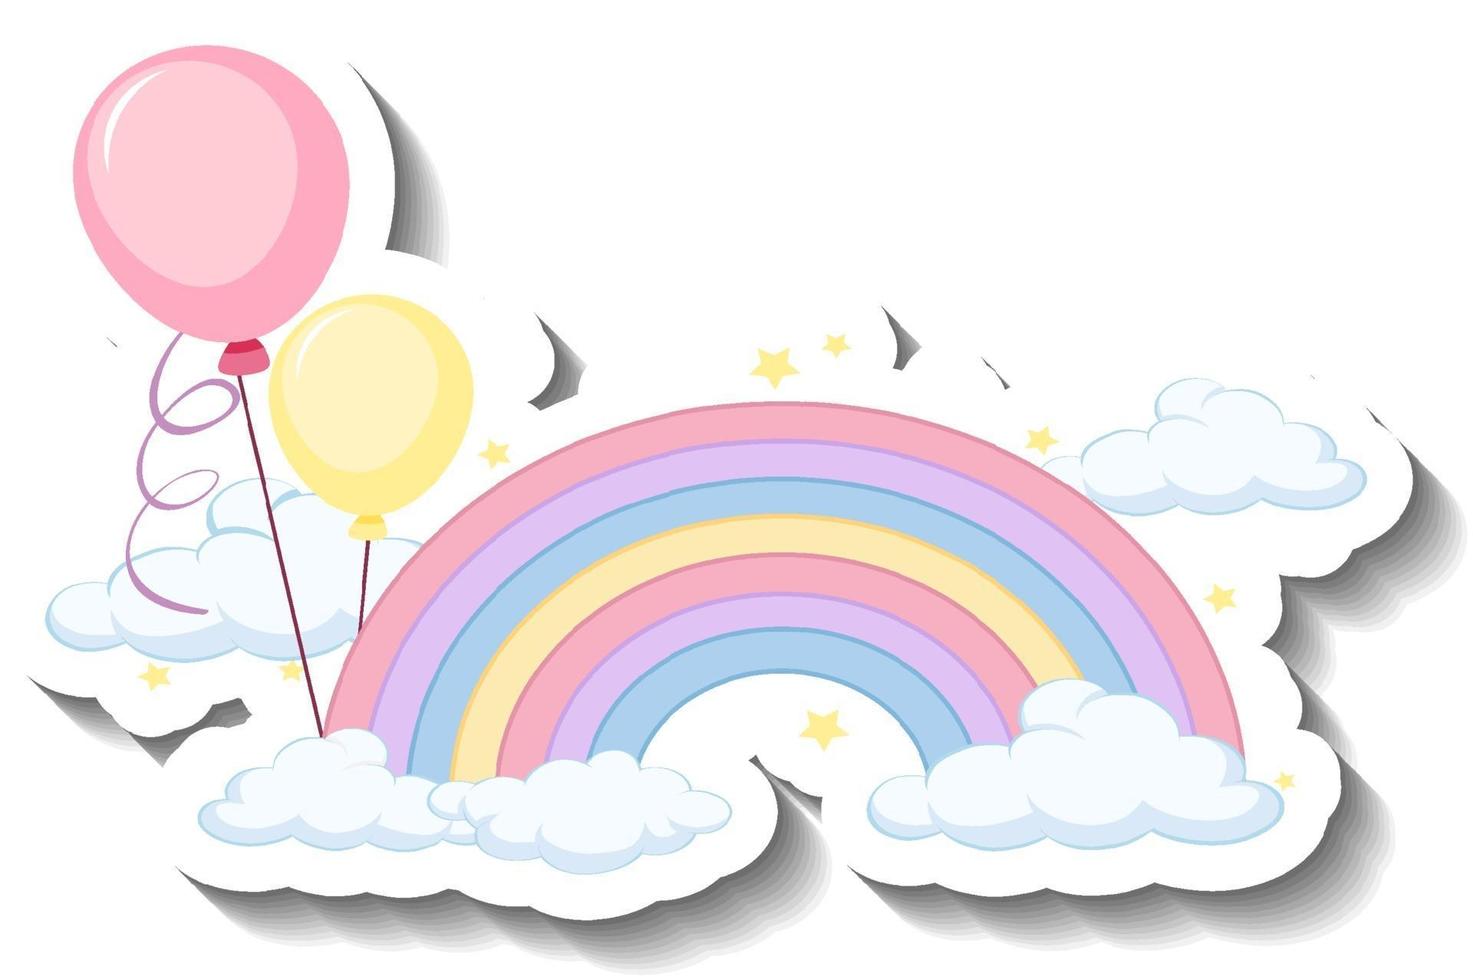 Isolated pastel rainbow with balloons cartoon sticker vector